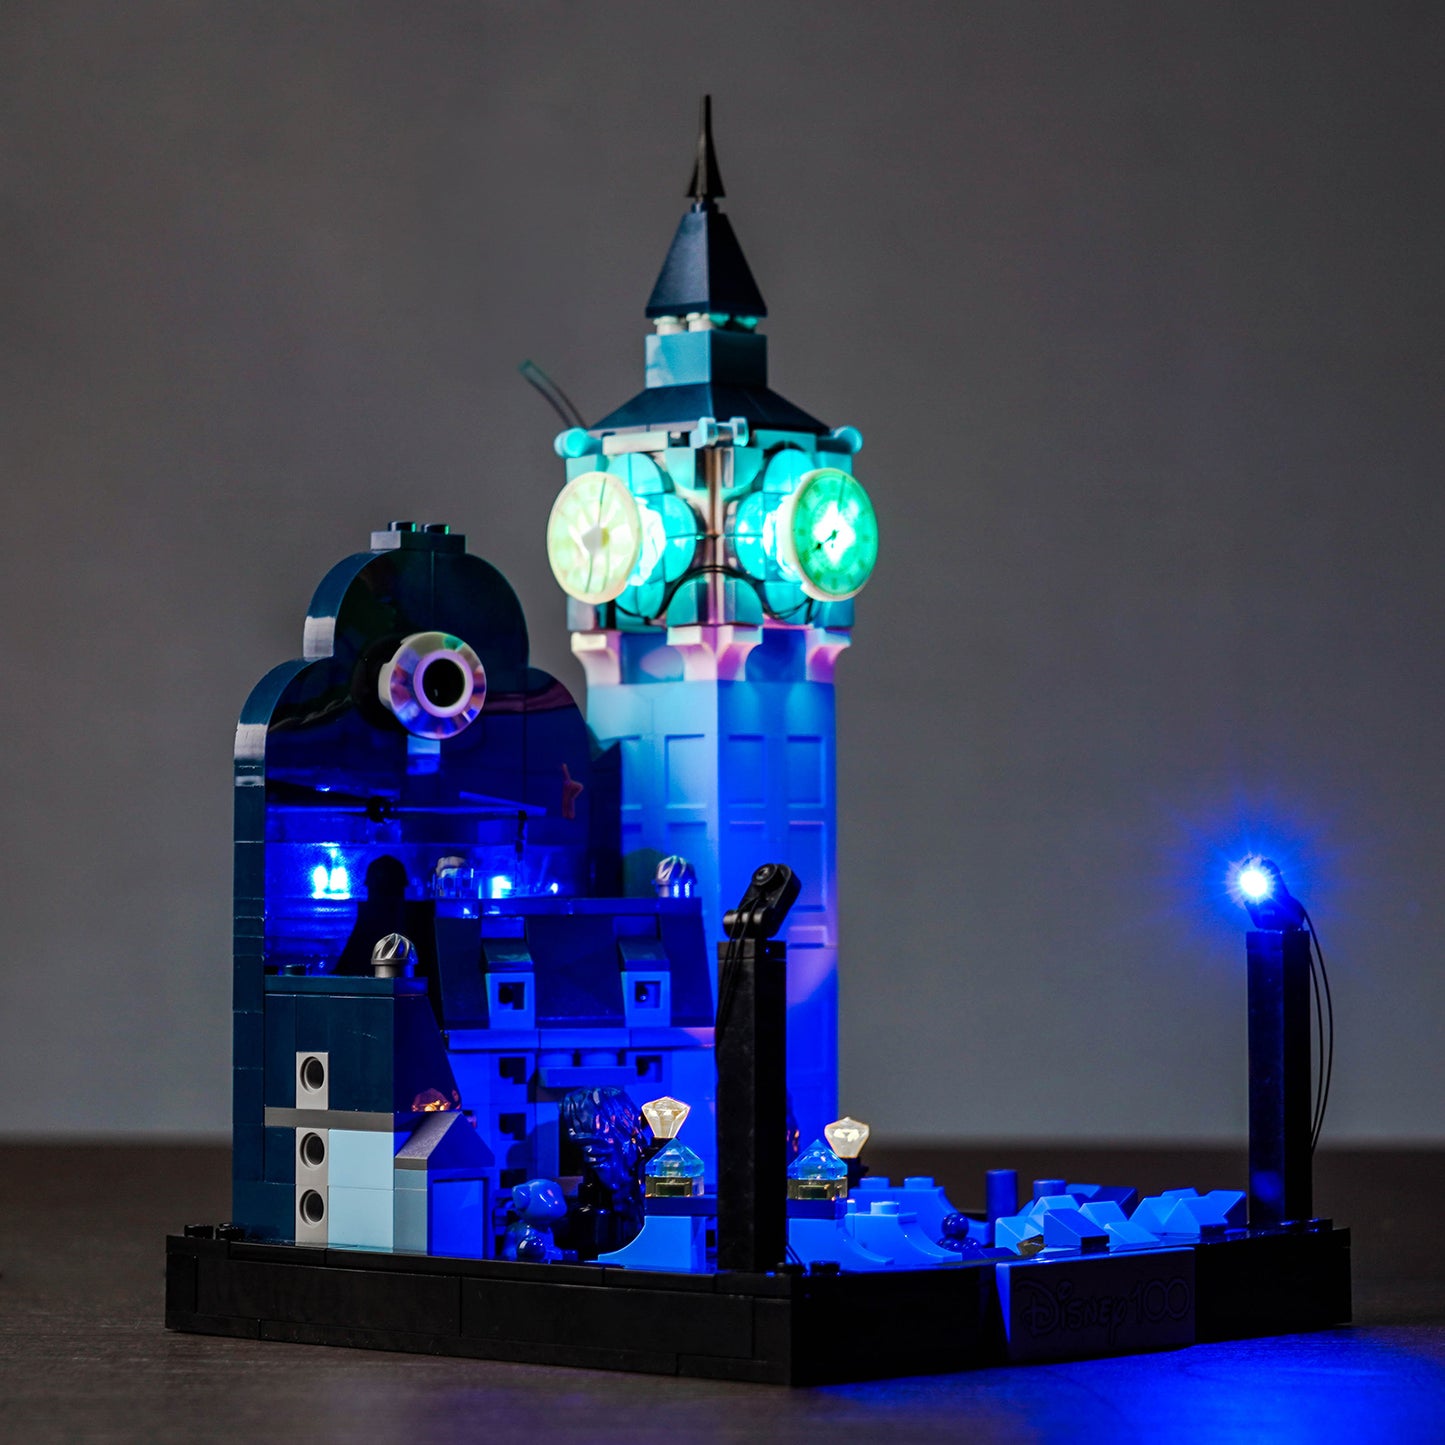 icuanuty LED light lego 43232 Peter Pan & Wendy's Flight over London lego lighting kit